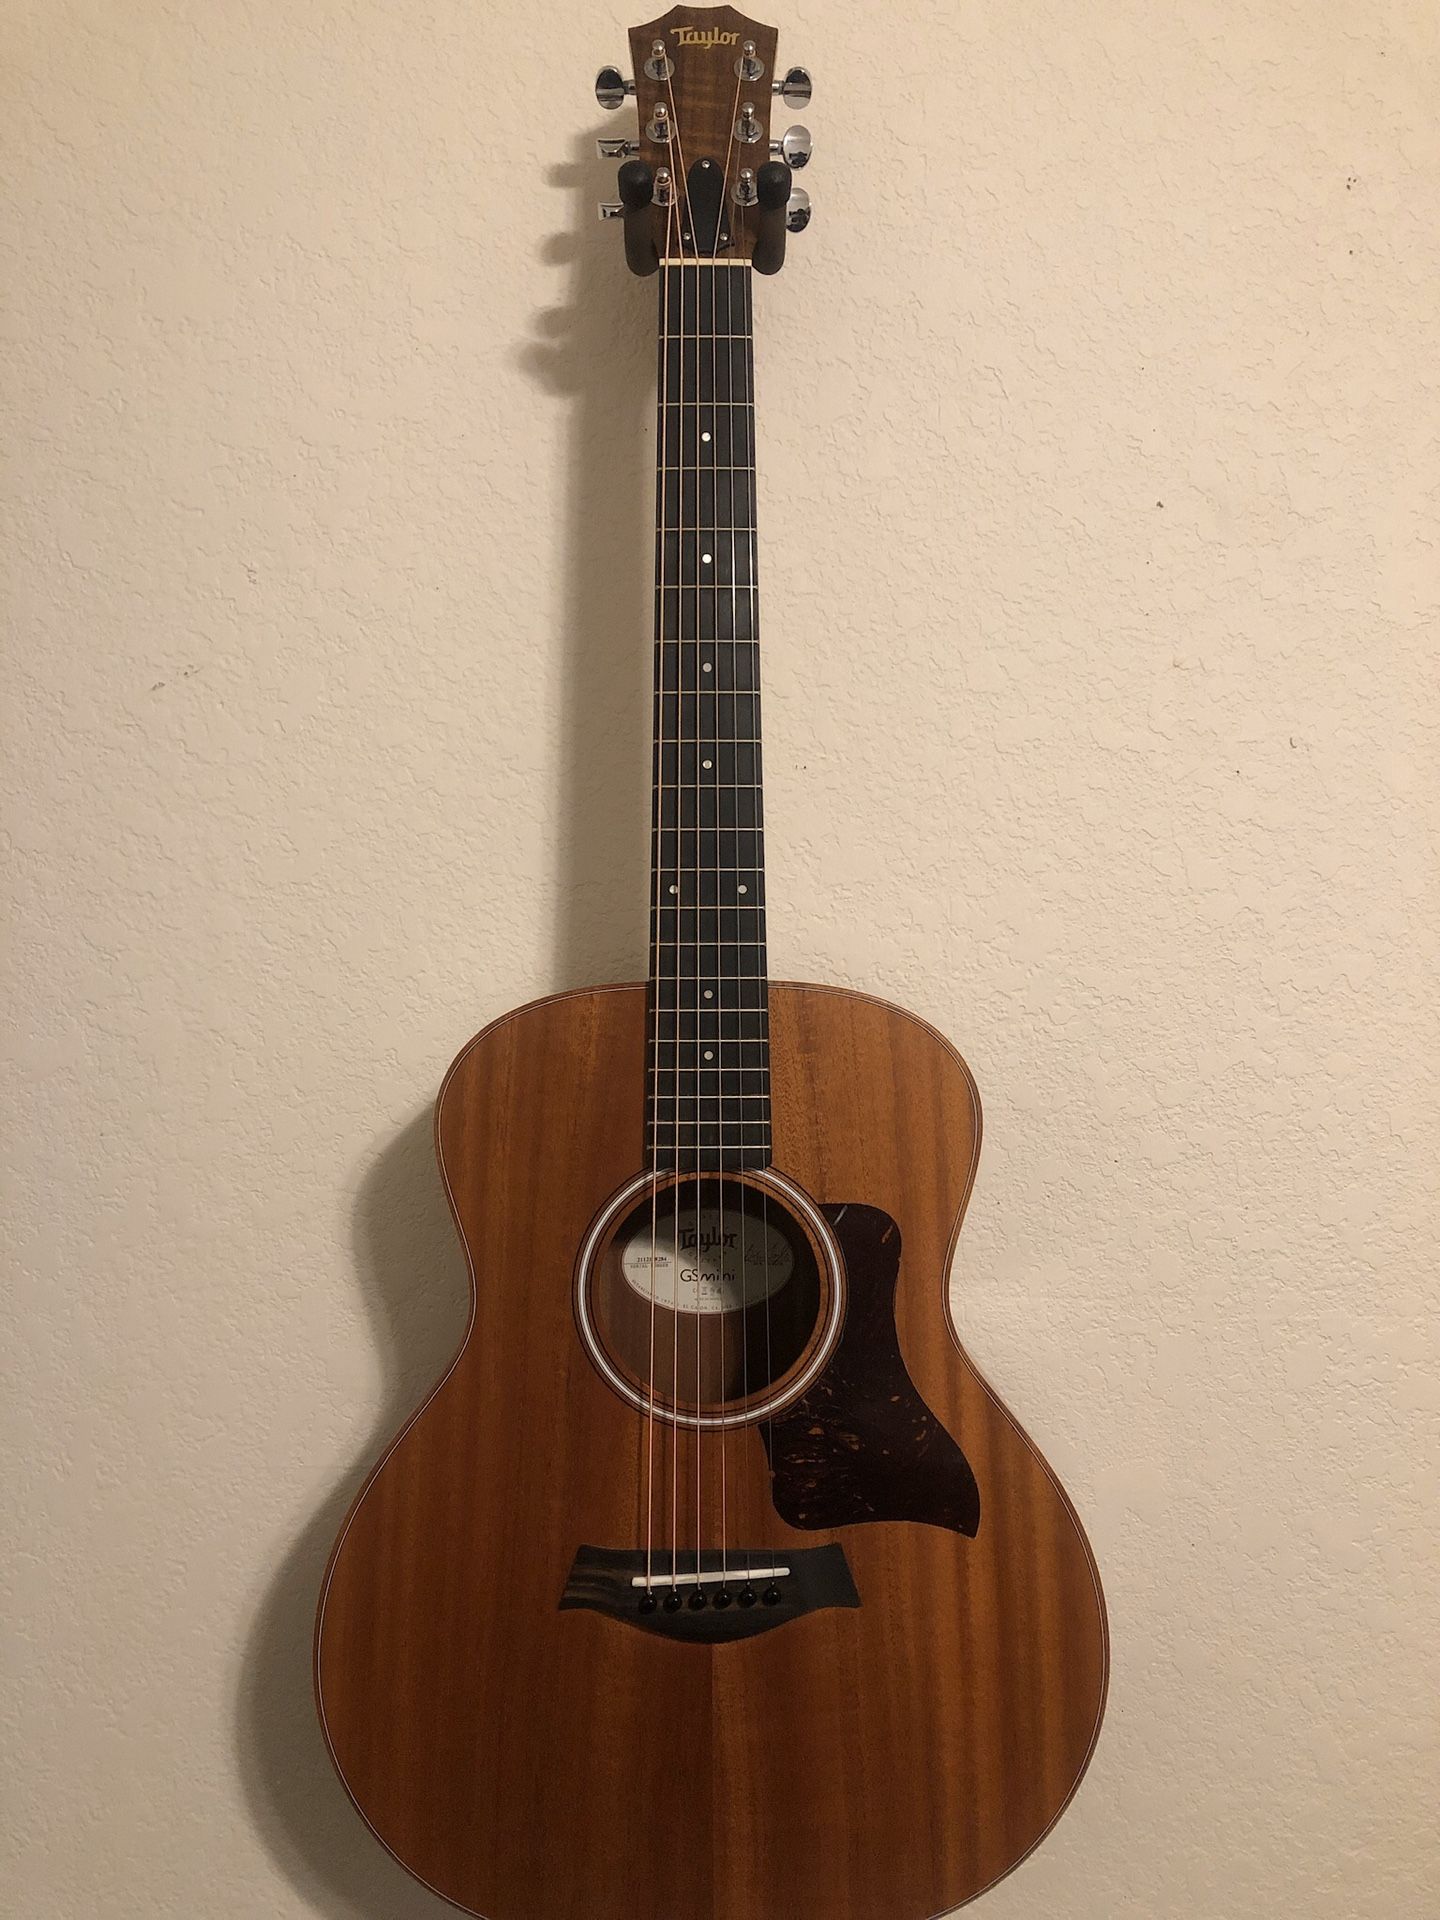 Taylor GS mini guitar